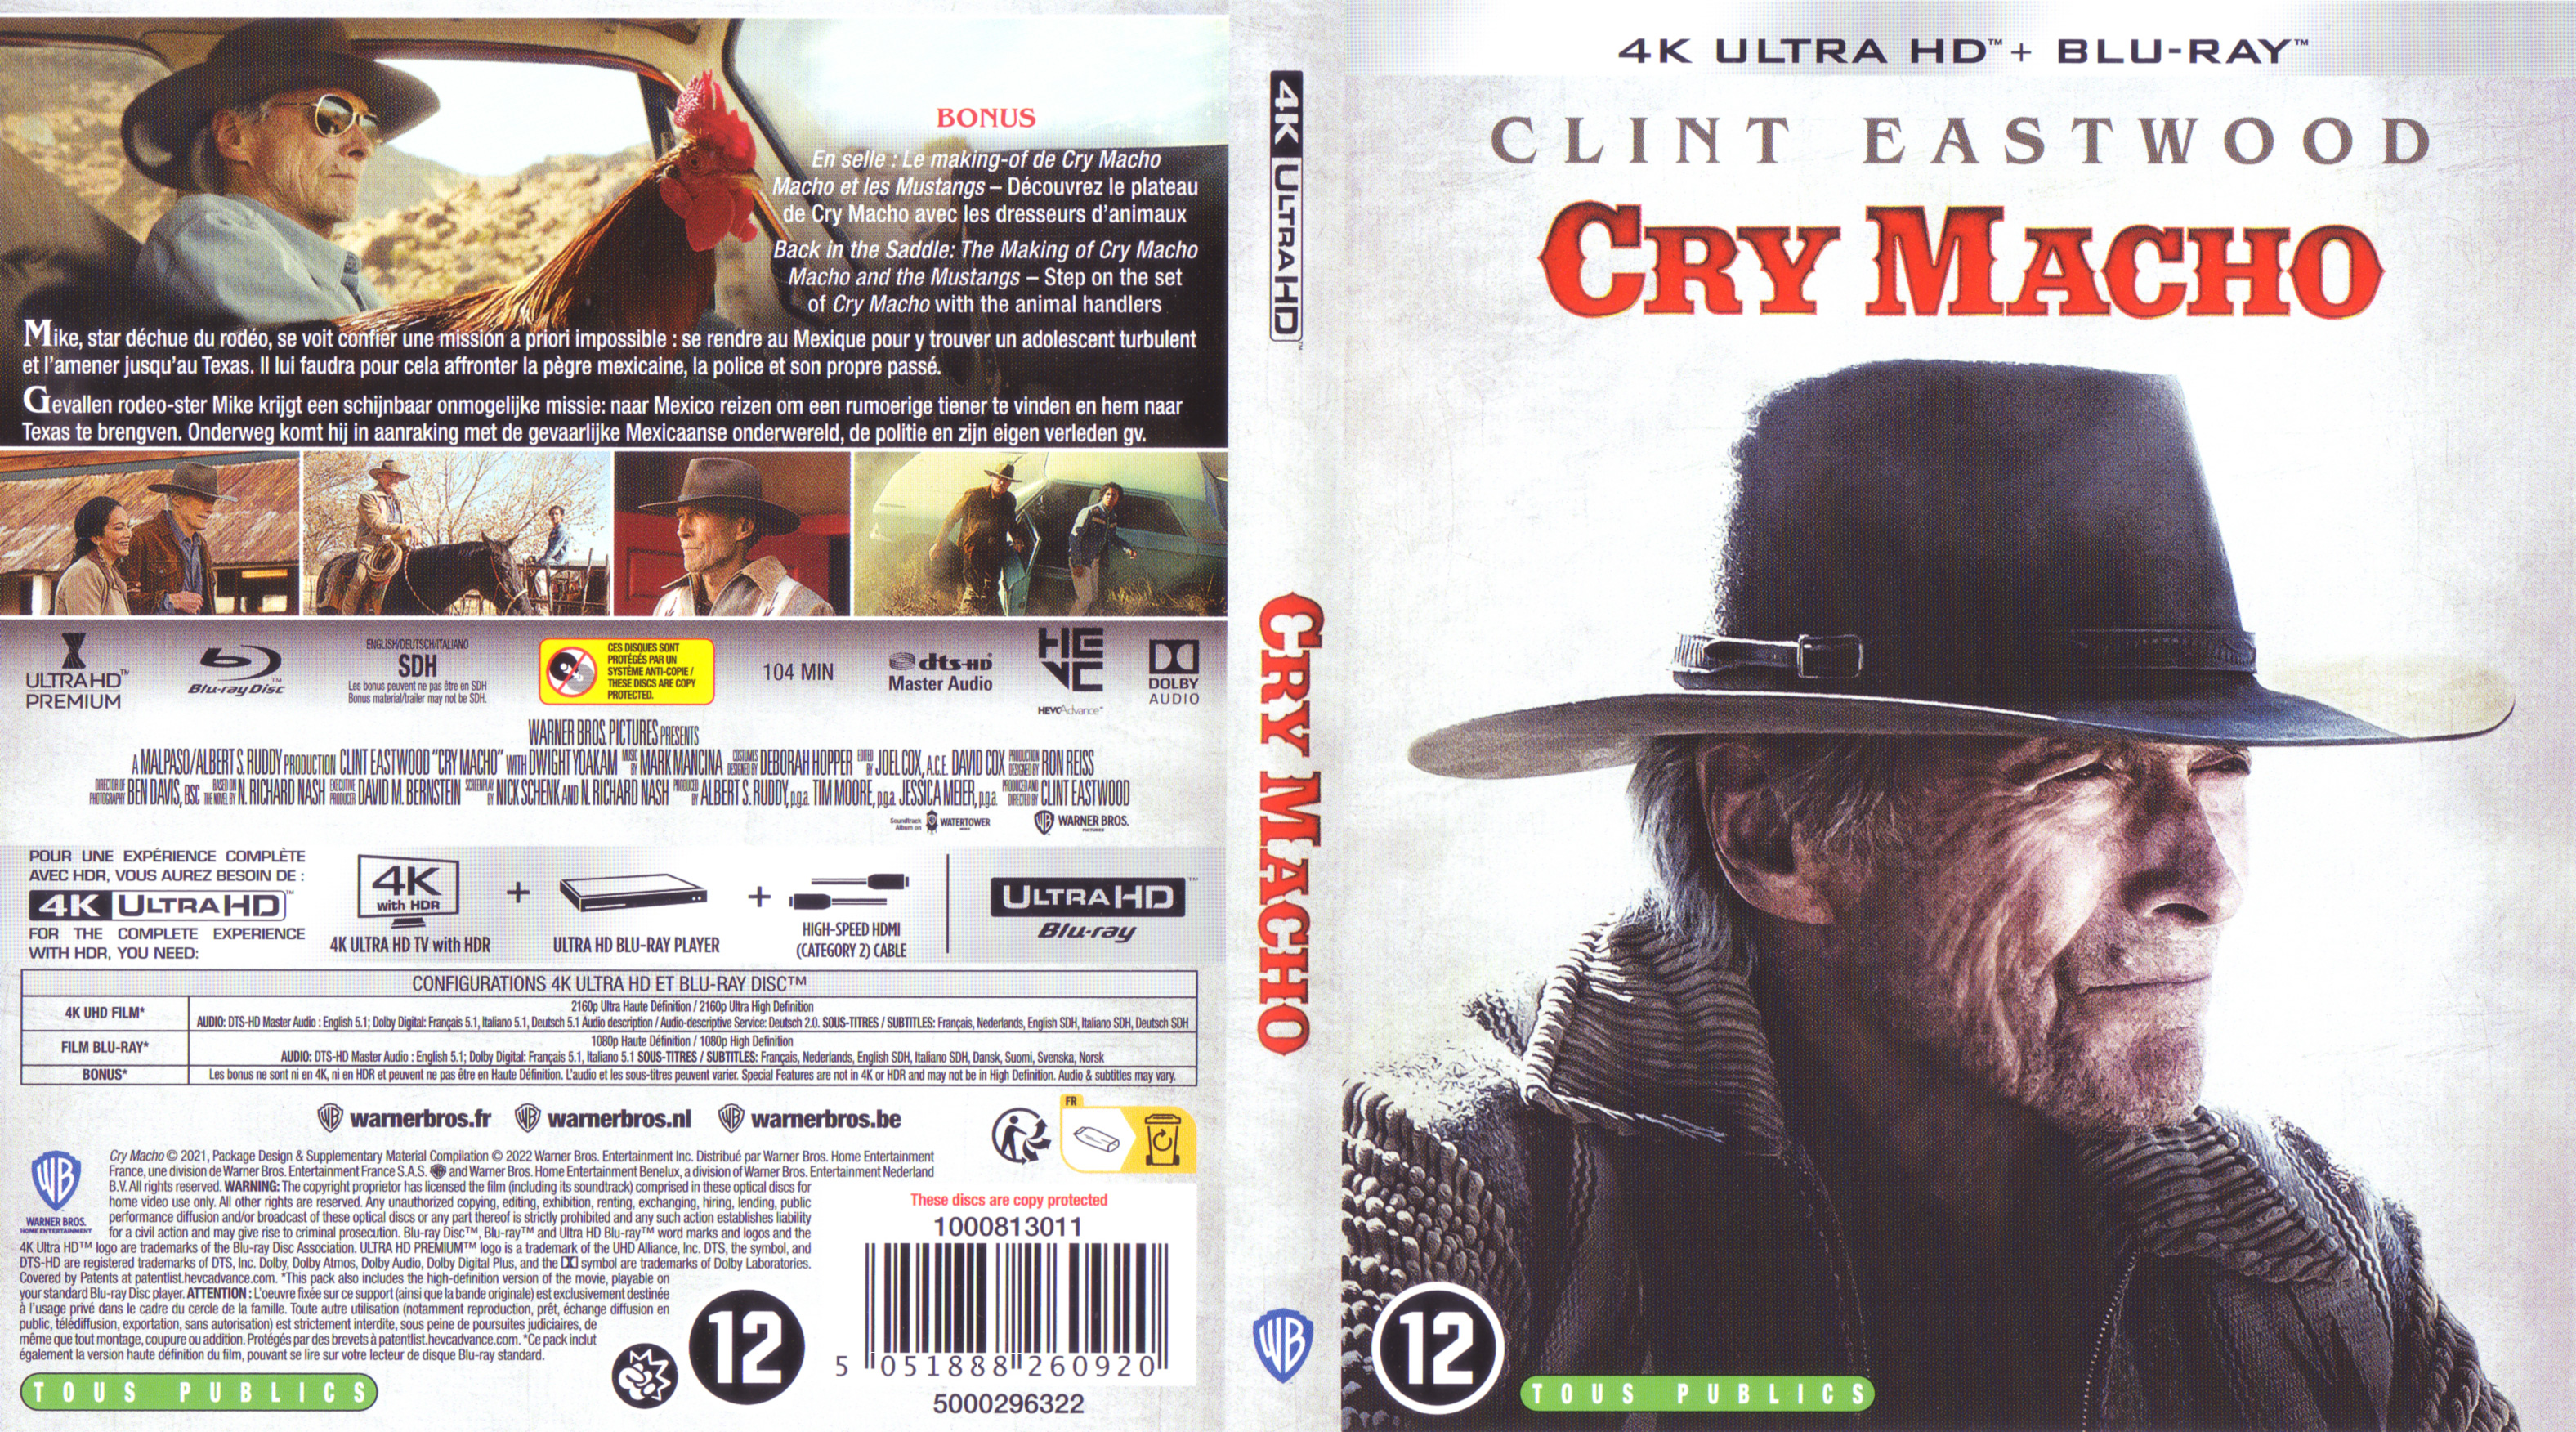 Jaquette DVD Cry macho 4K (BLU-RAY)